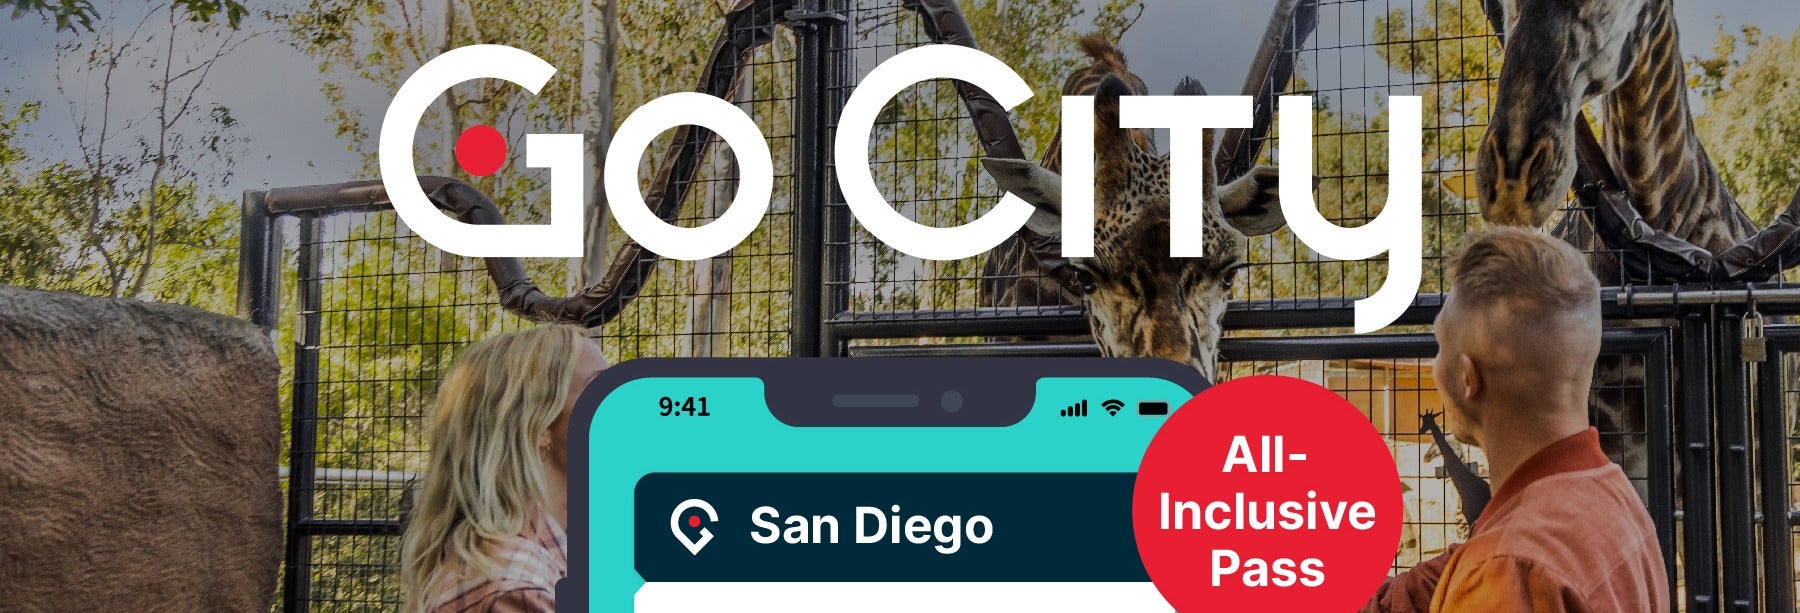 Go City San Diego All-Inclusive Pass